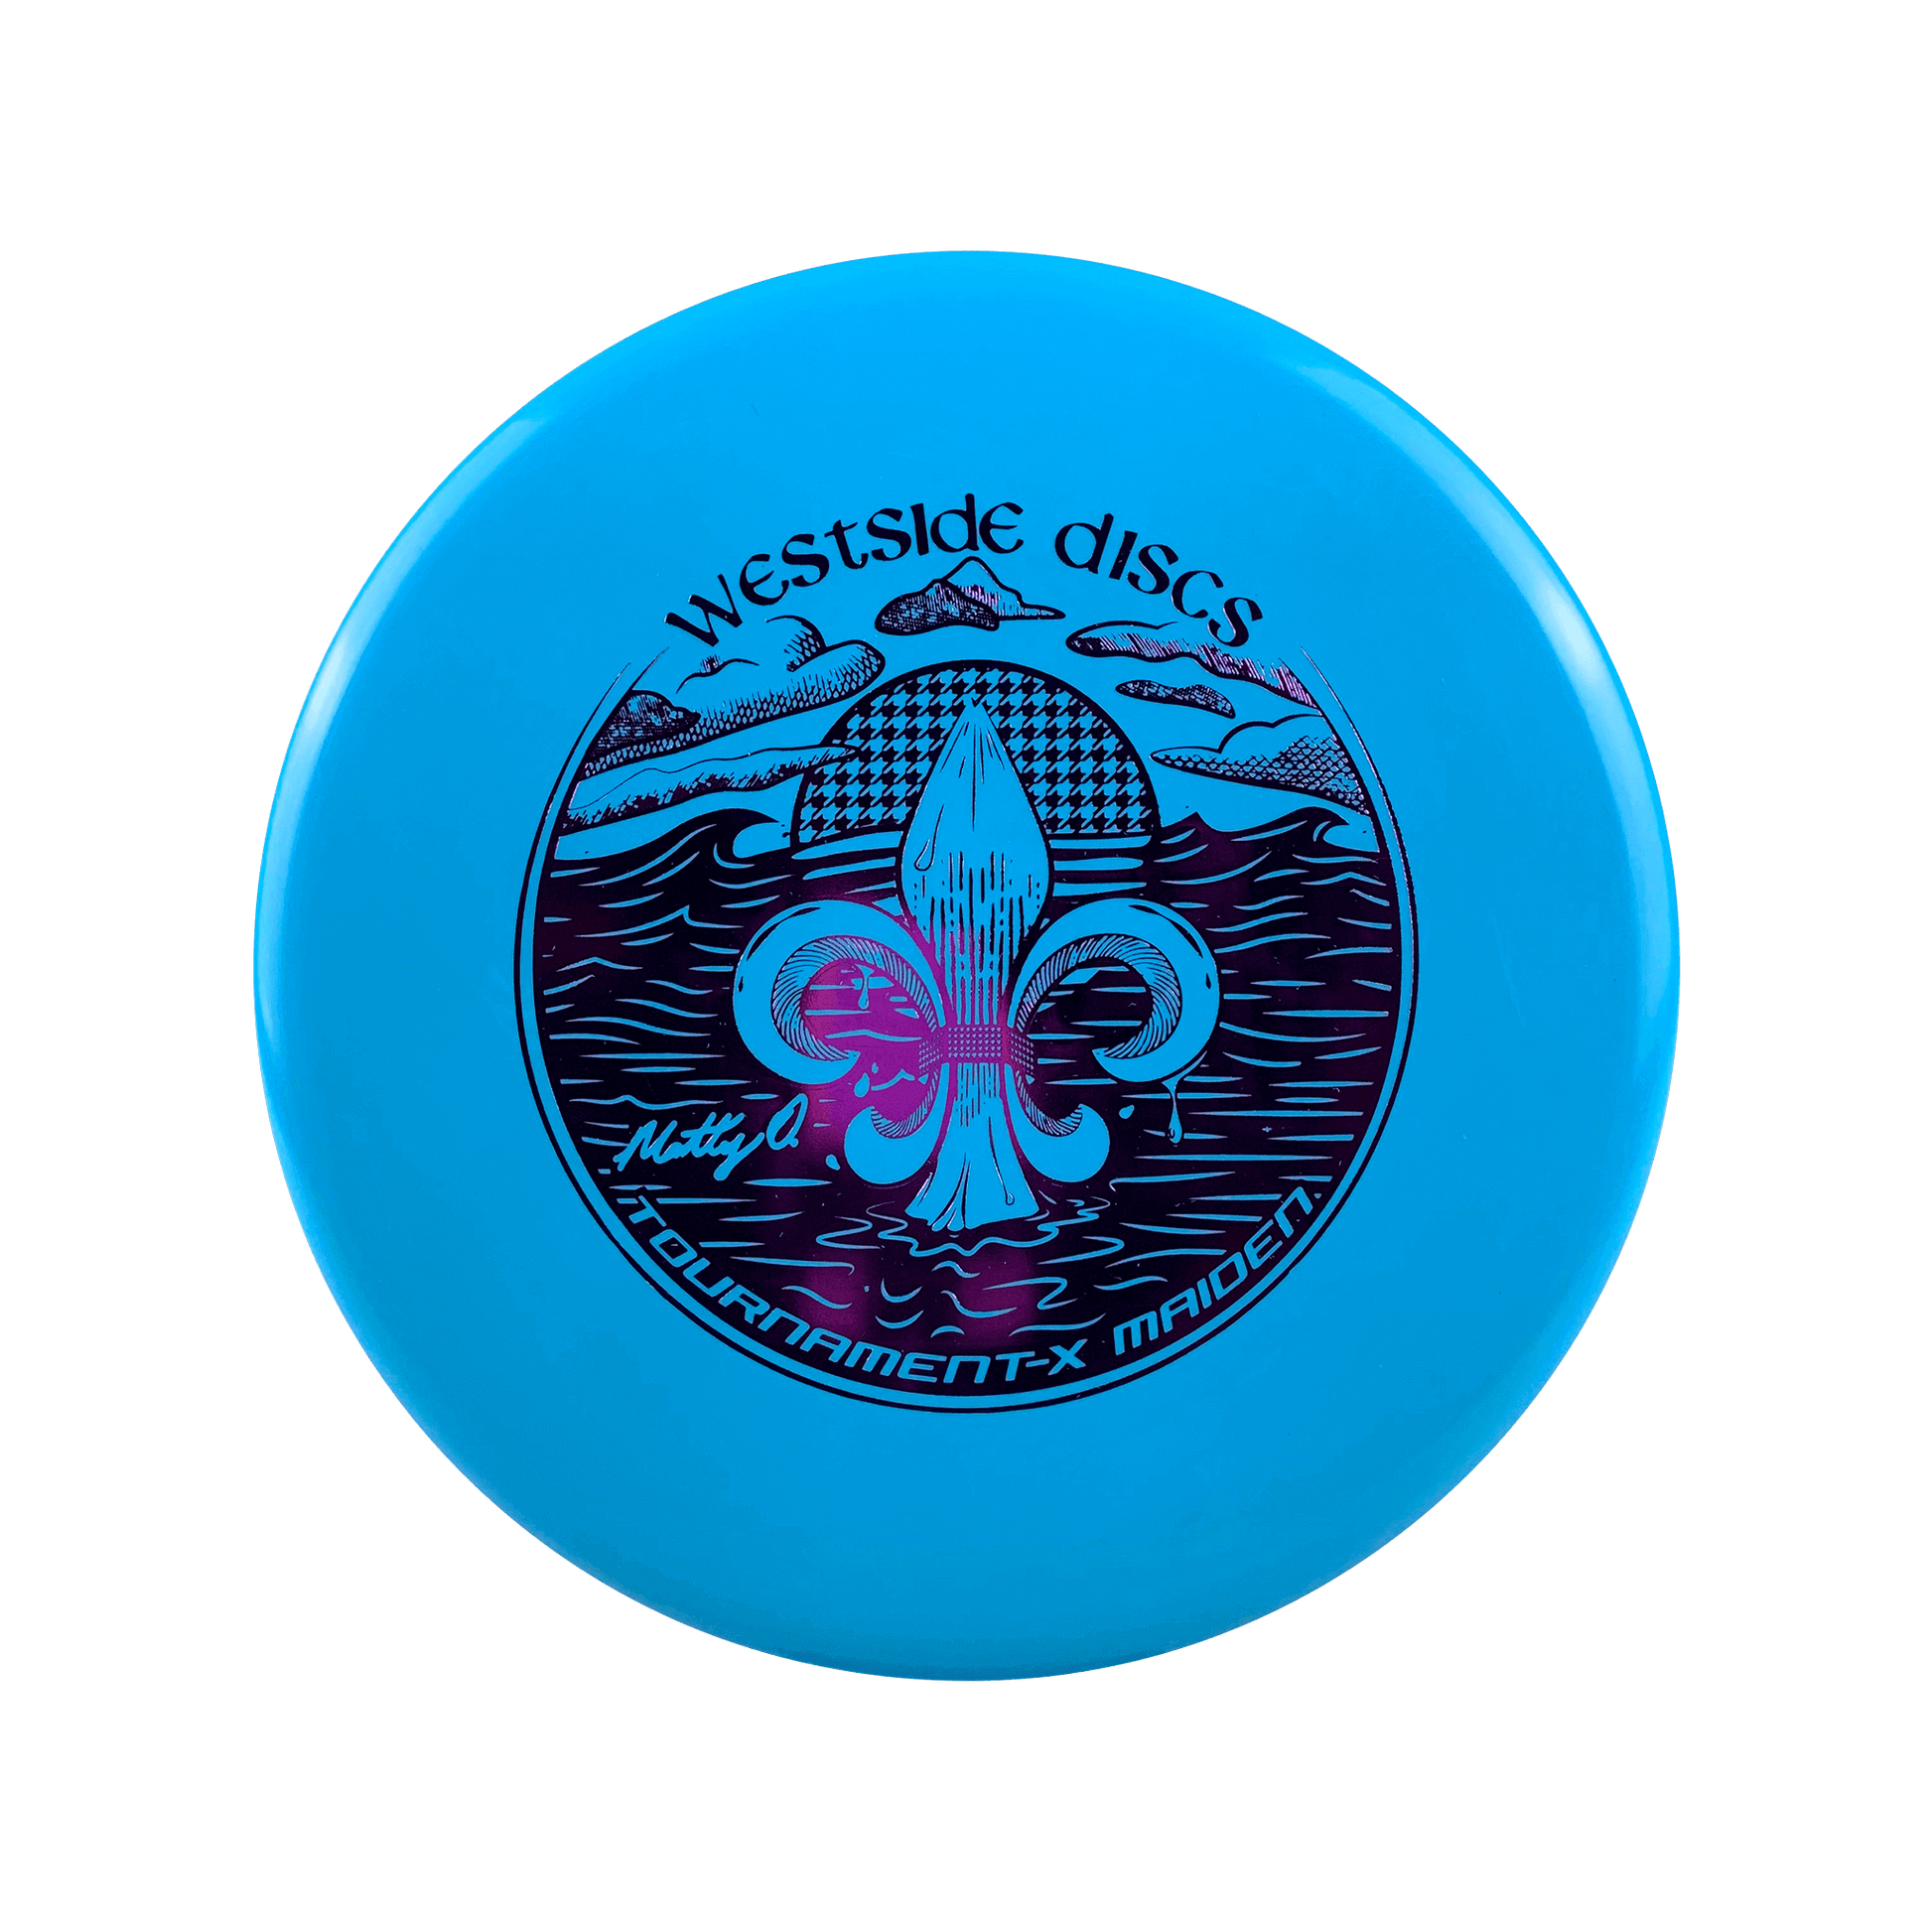 Tournament-X Maiden - Matt Orum Signature Series Disc Westside Discs blue 174 